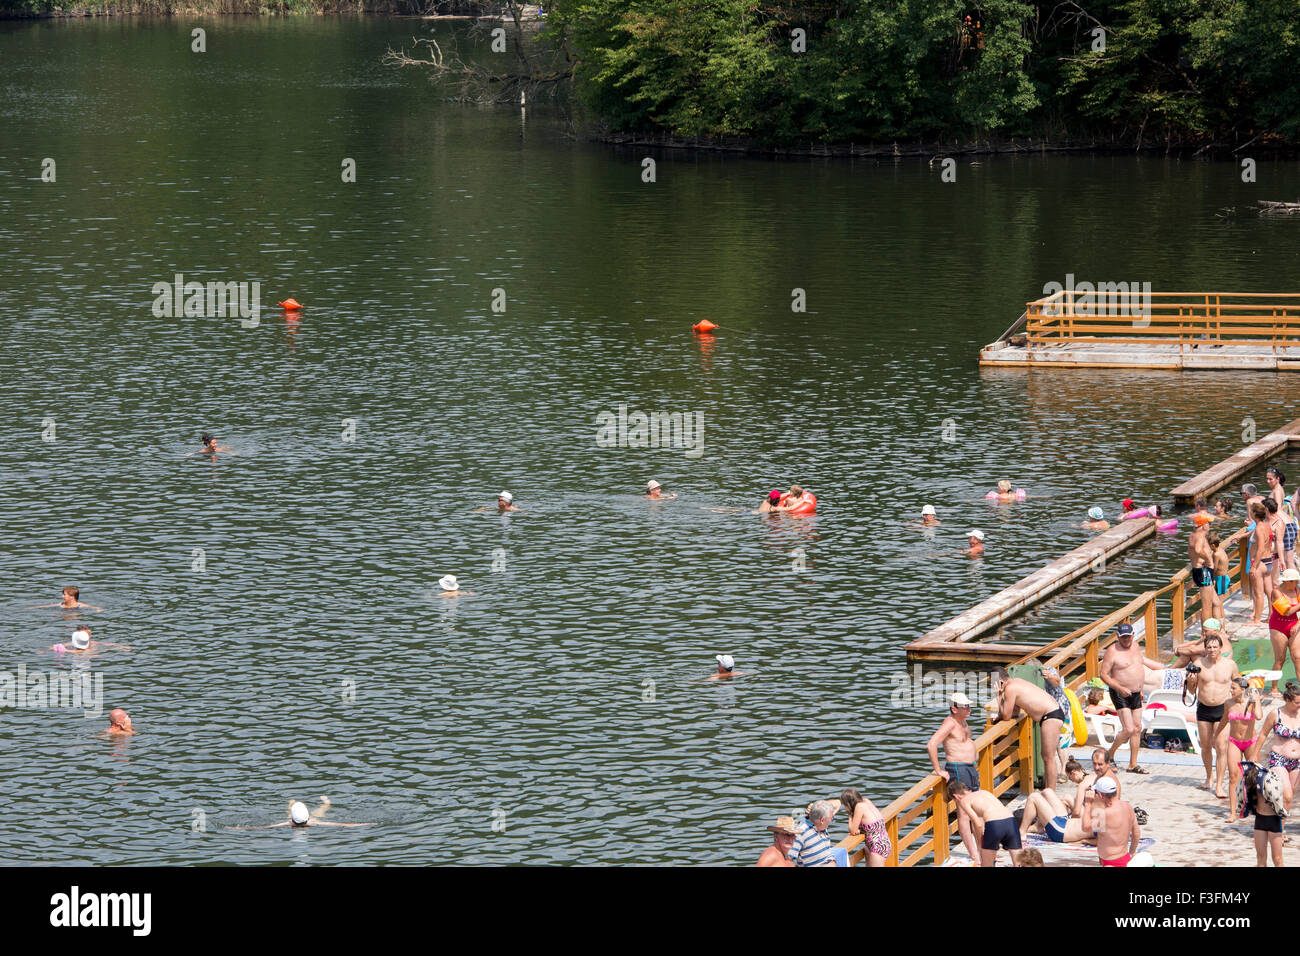 Crowd of people at the Bear Lake (Lacu Ursu) in Sovata, Transylvania, Romania Stock Photo